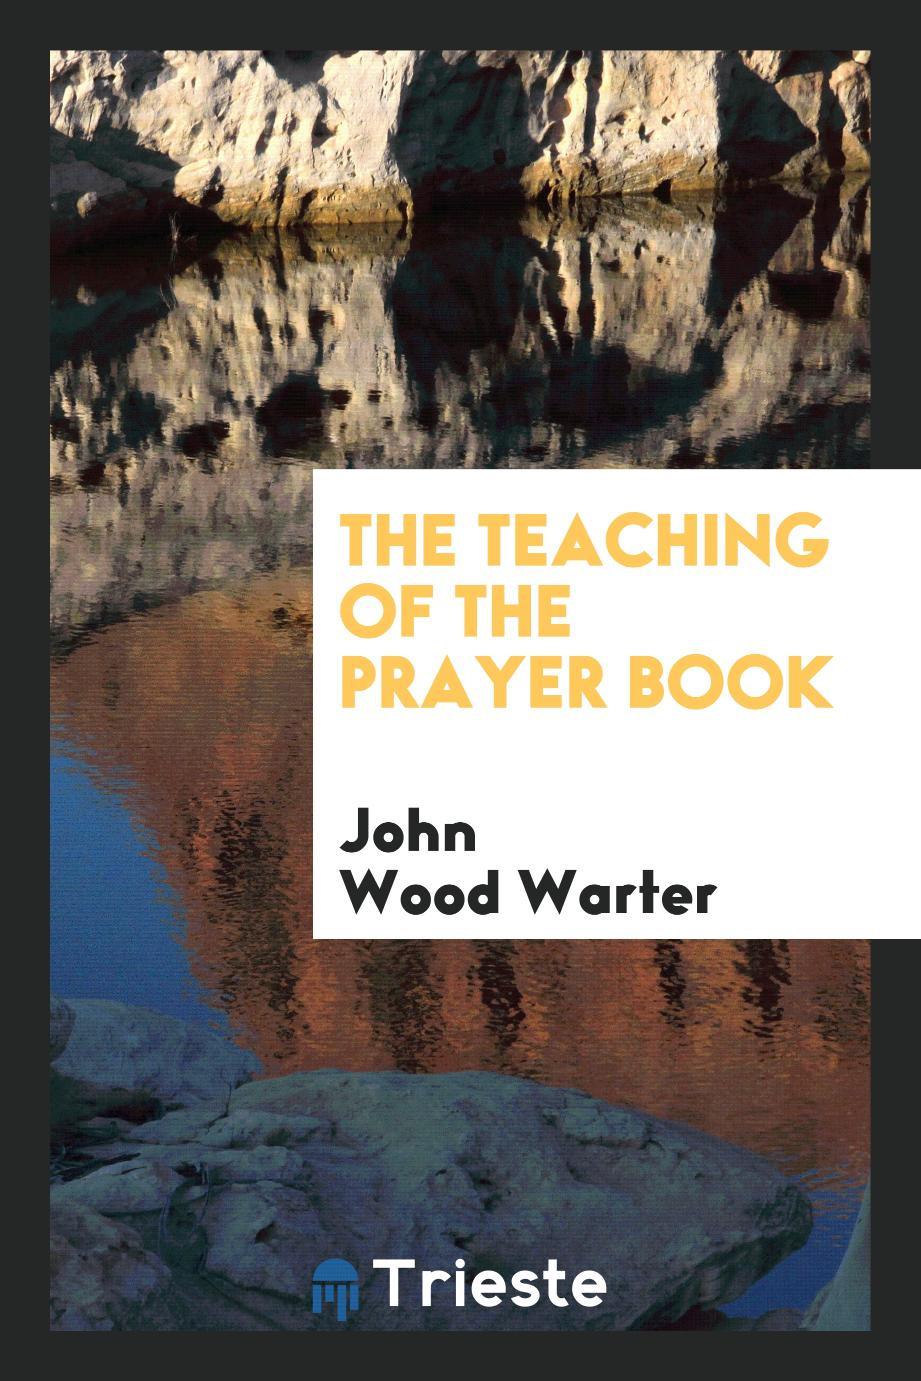 The teaching of the Prayer book